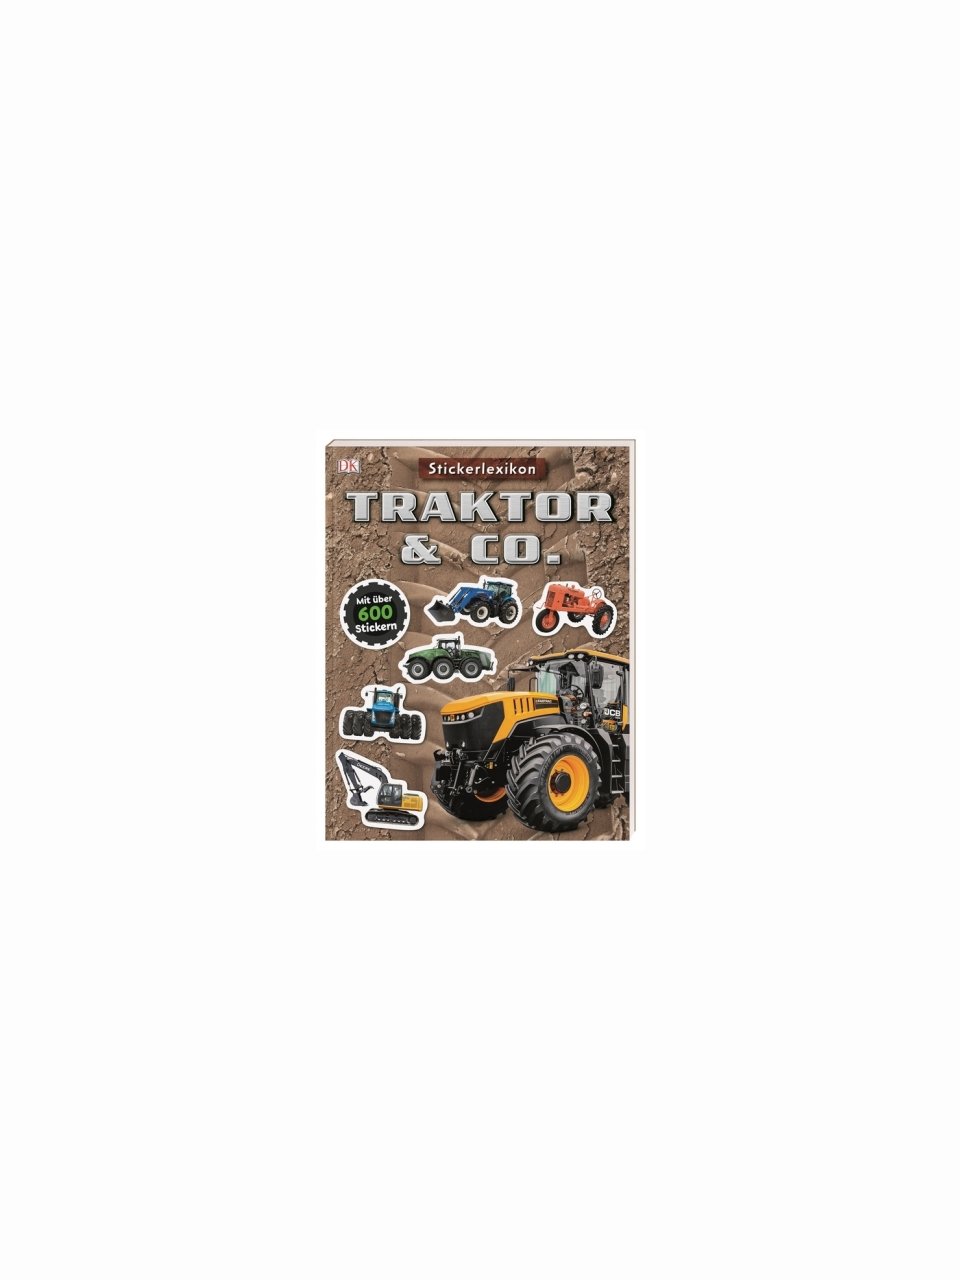 Stickerlexikon - Traktor & Co